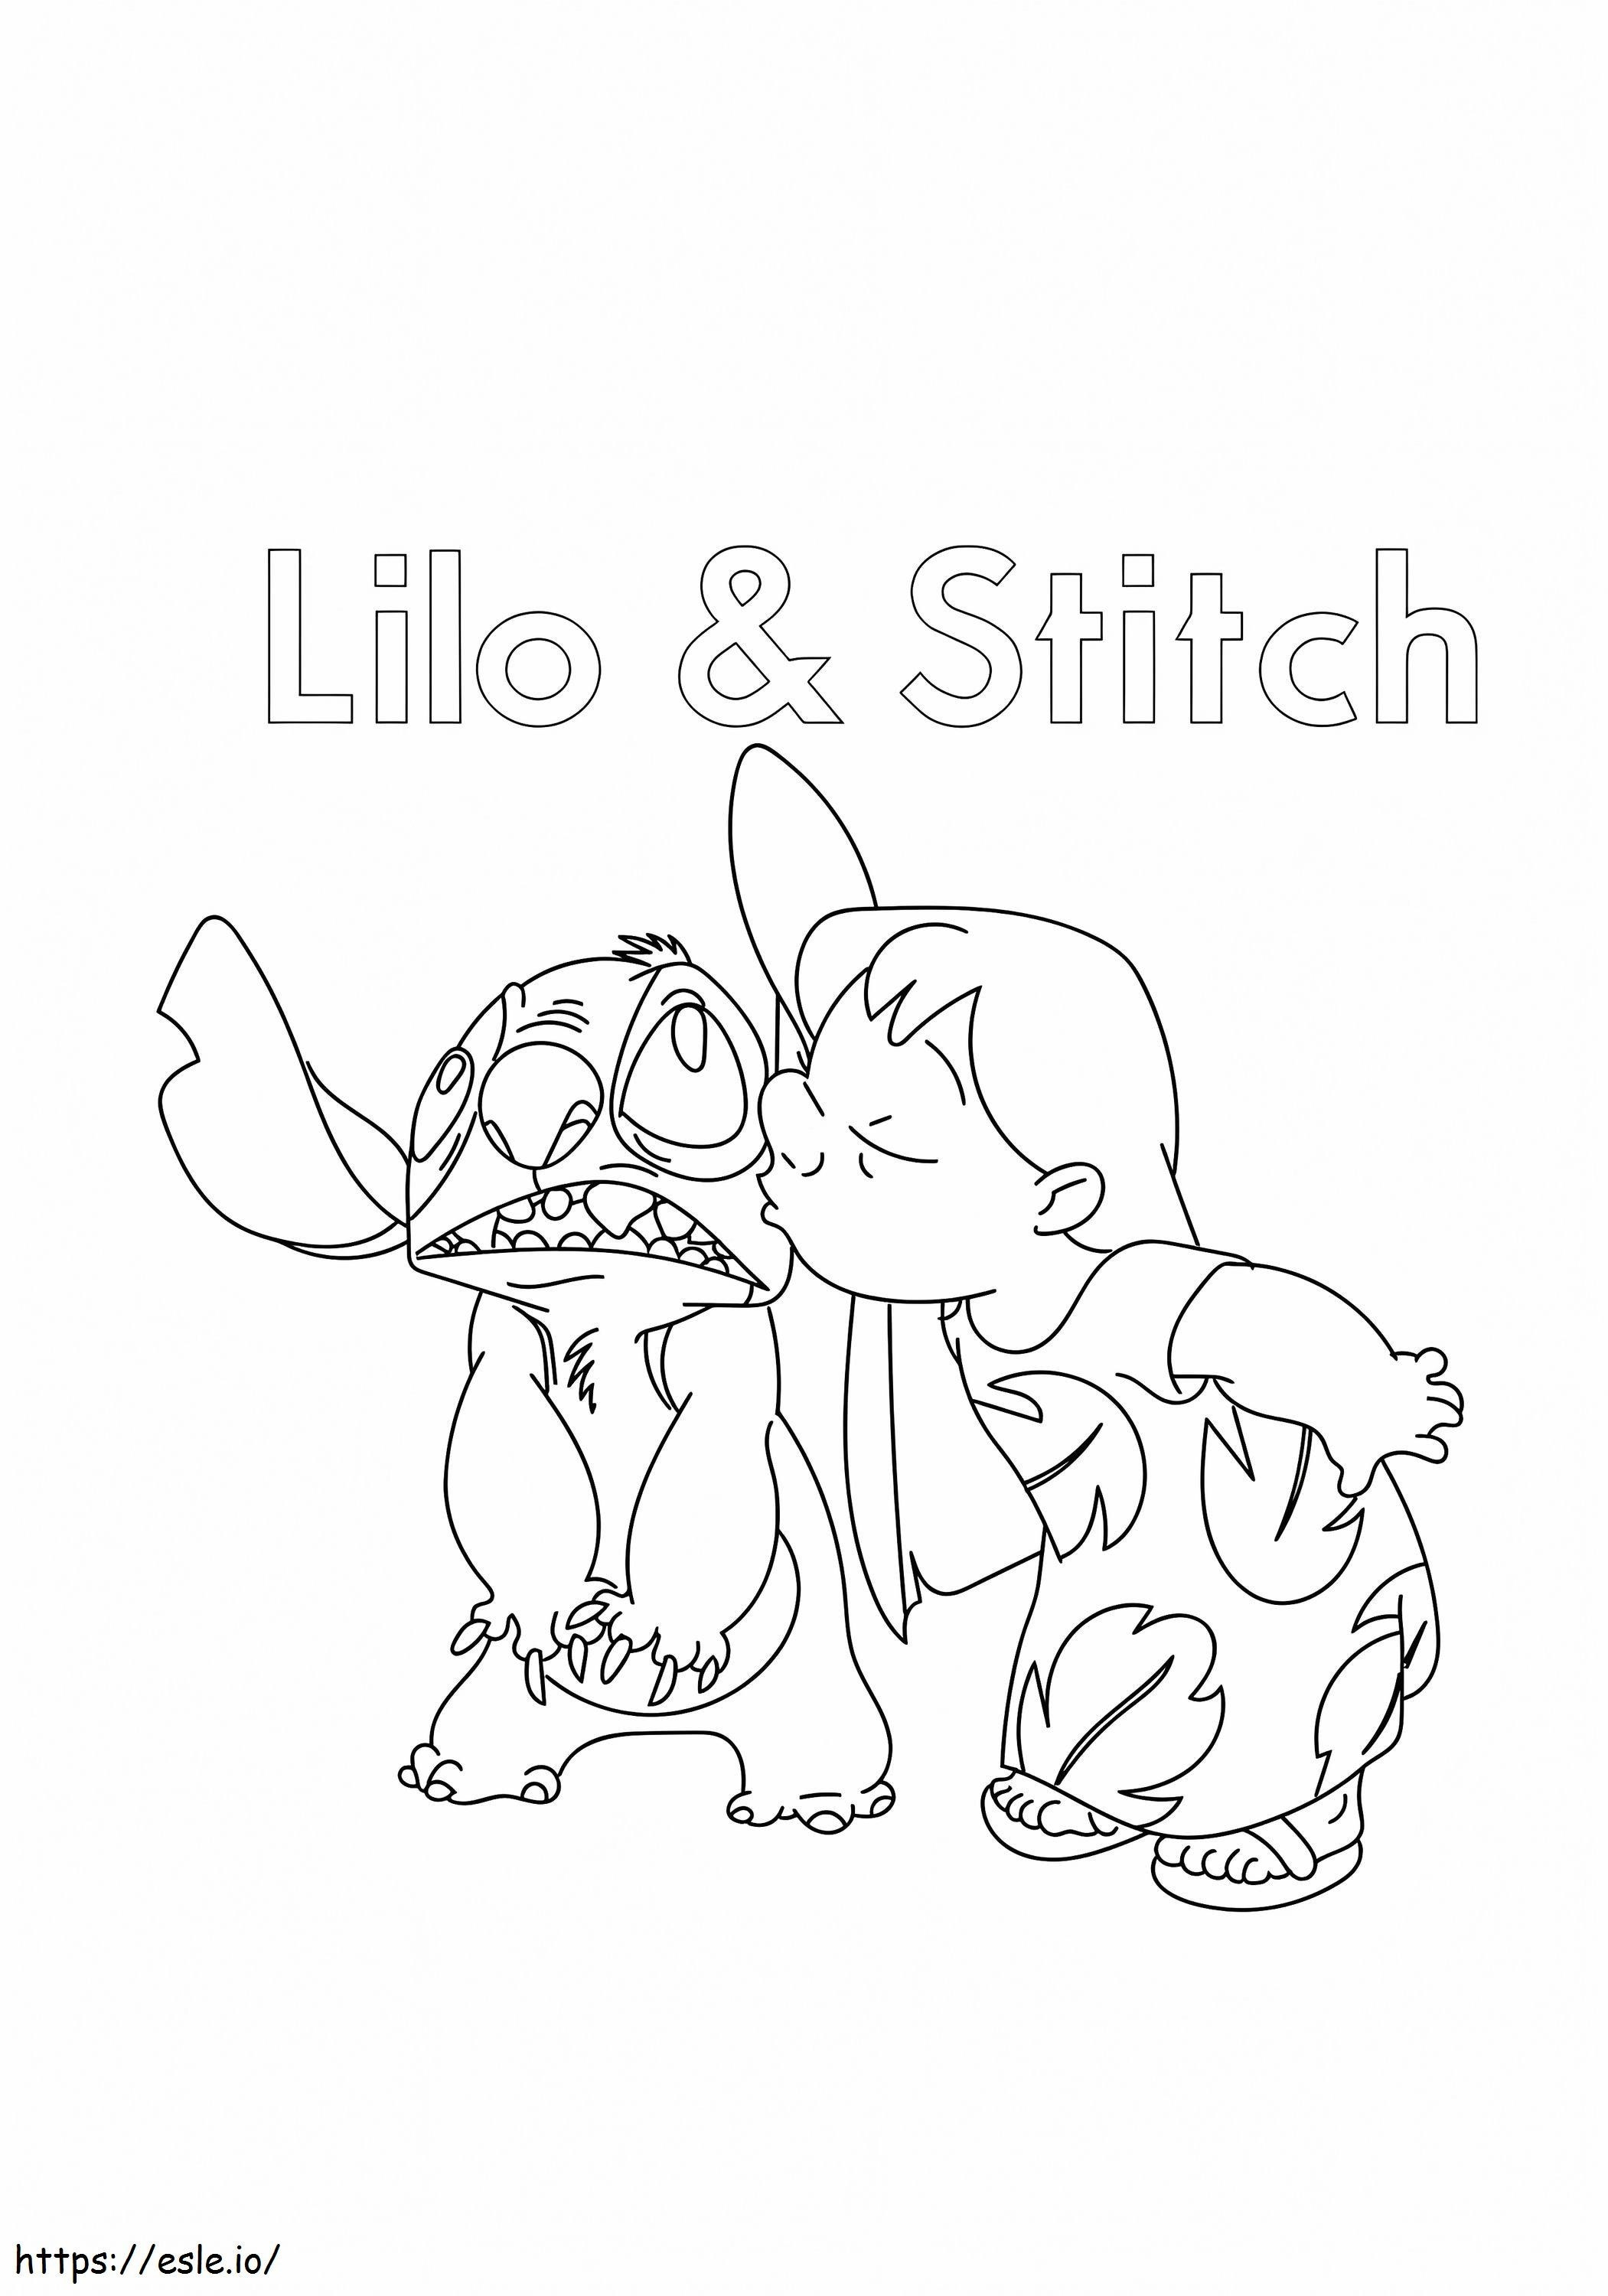 Lilo dan Stitch 10 717X1024 Gambar Mewarnai